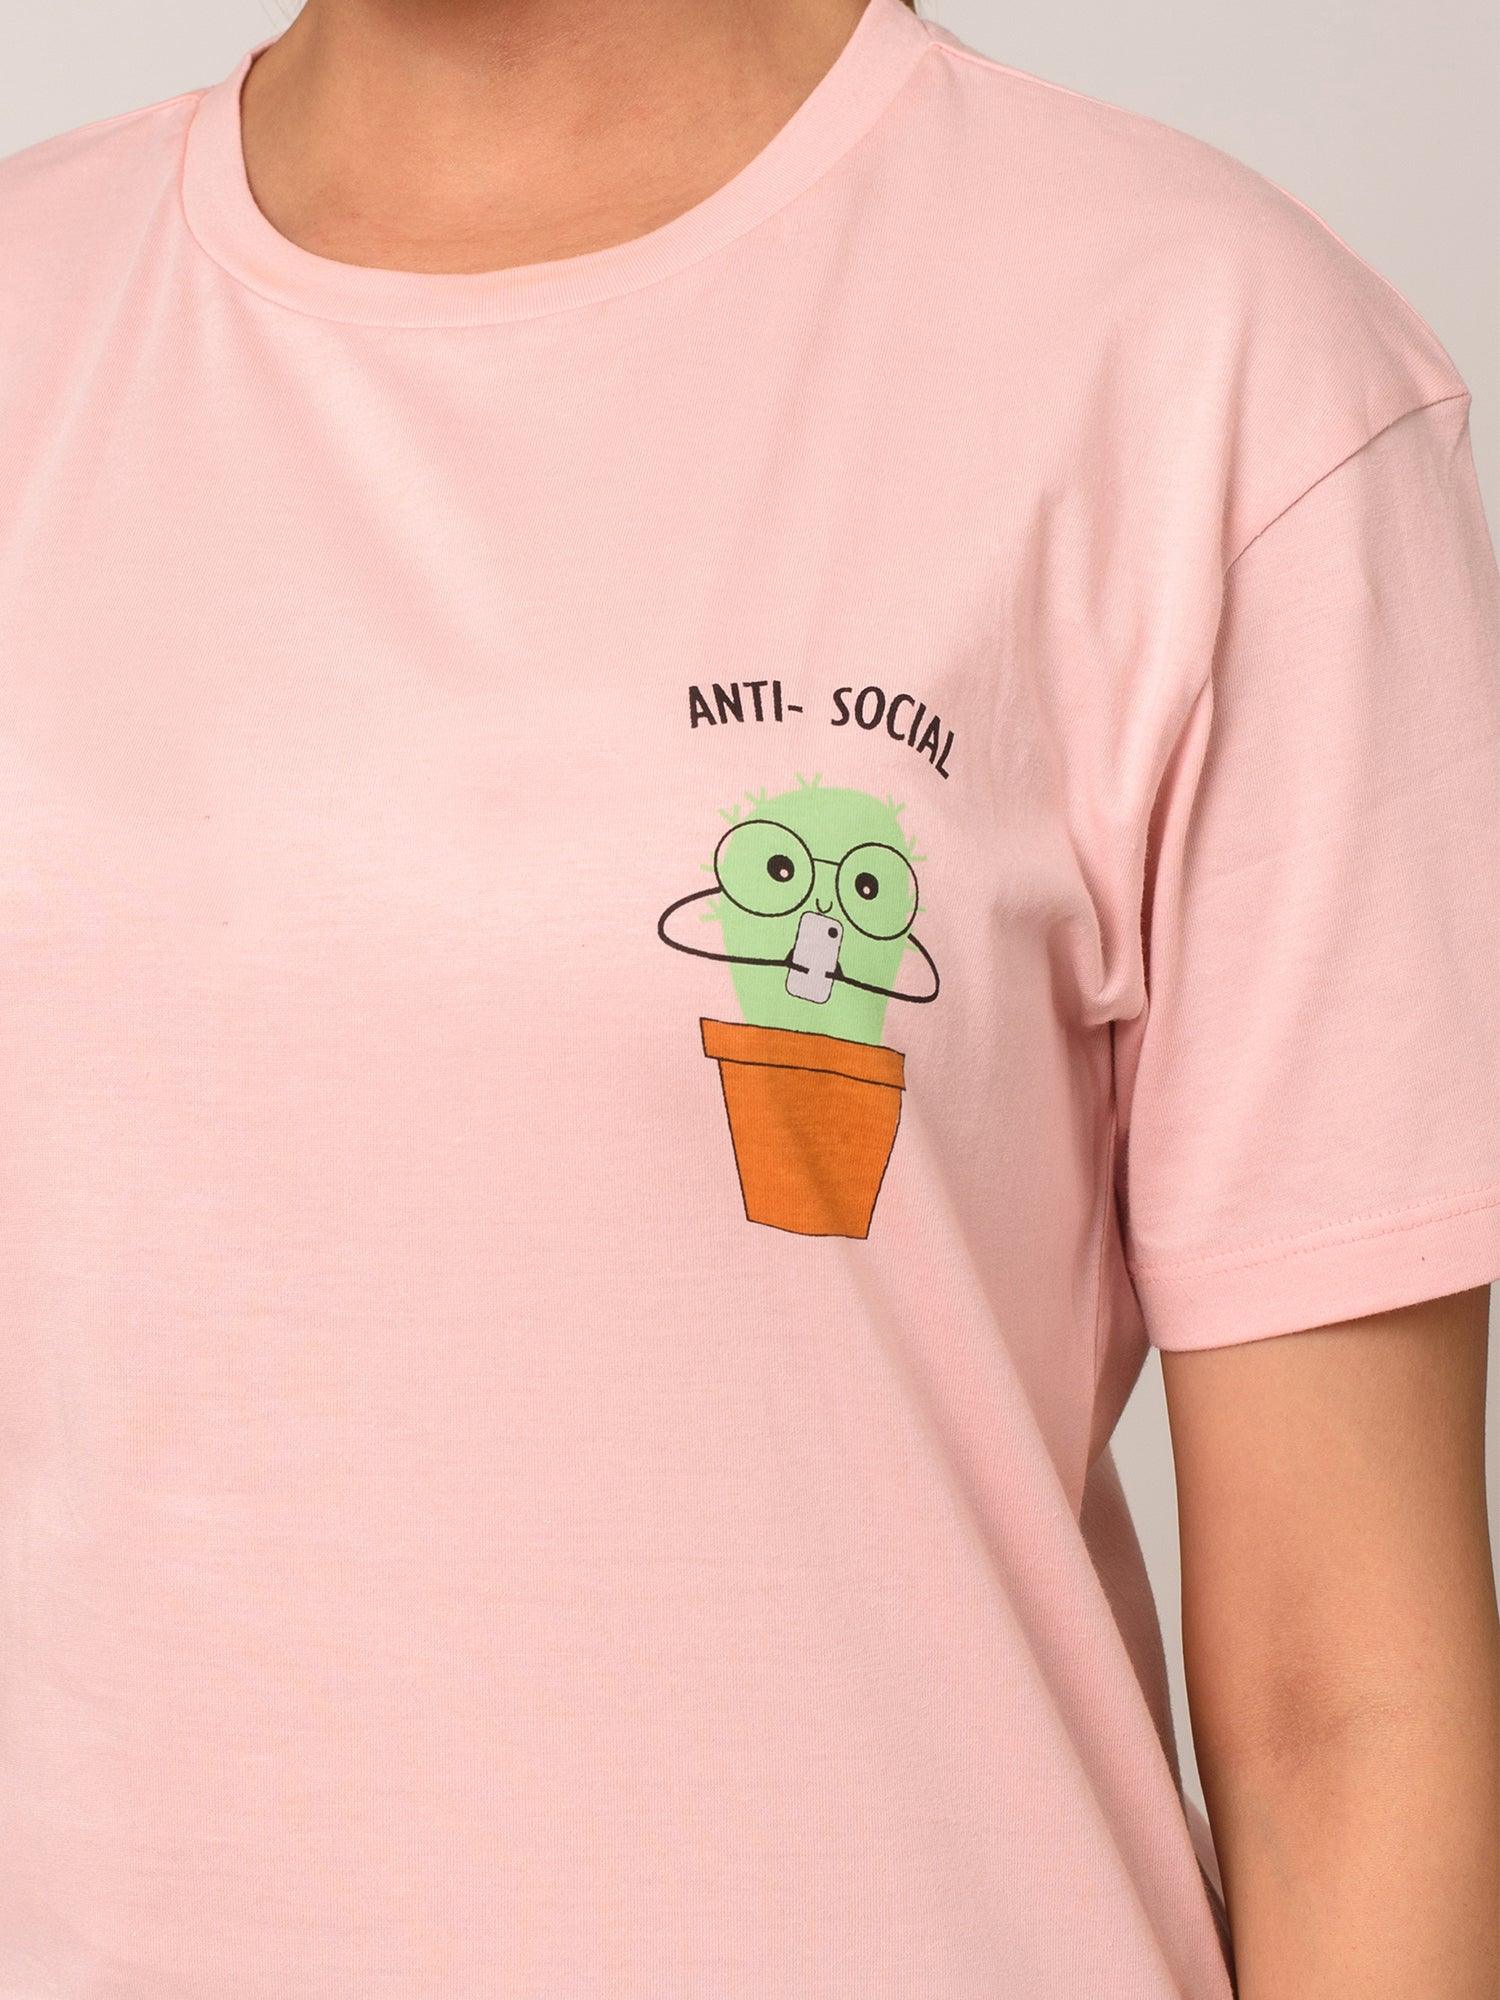 Anti-Social Cotton Graphic T-Shirt - soxytoes